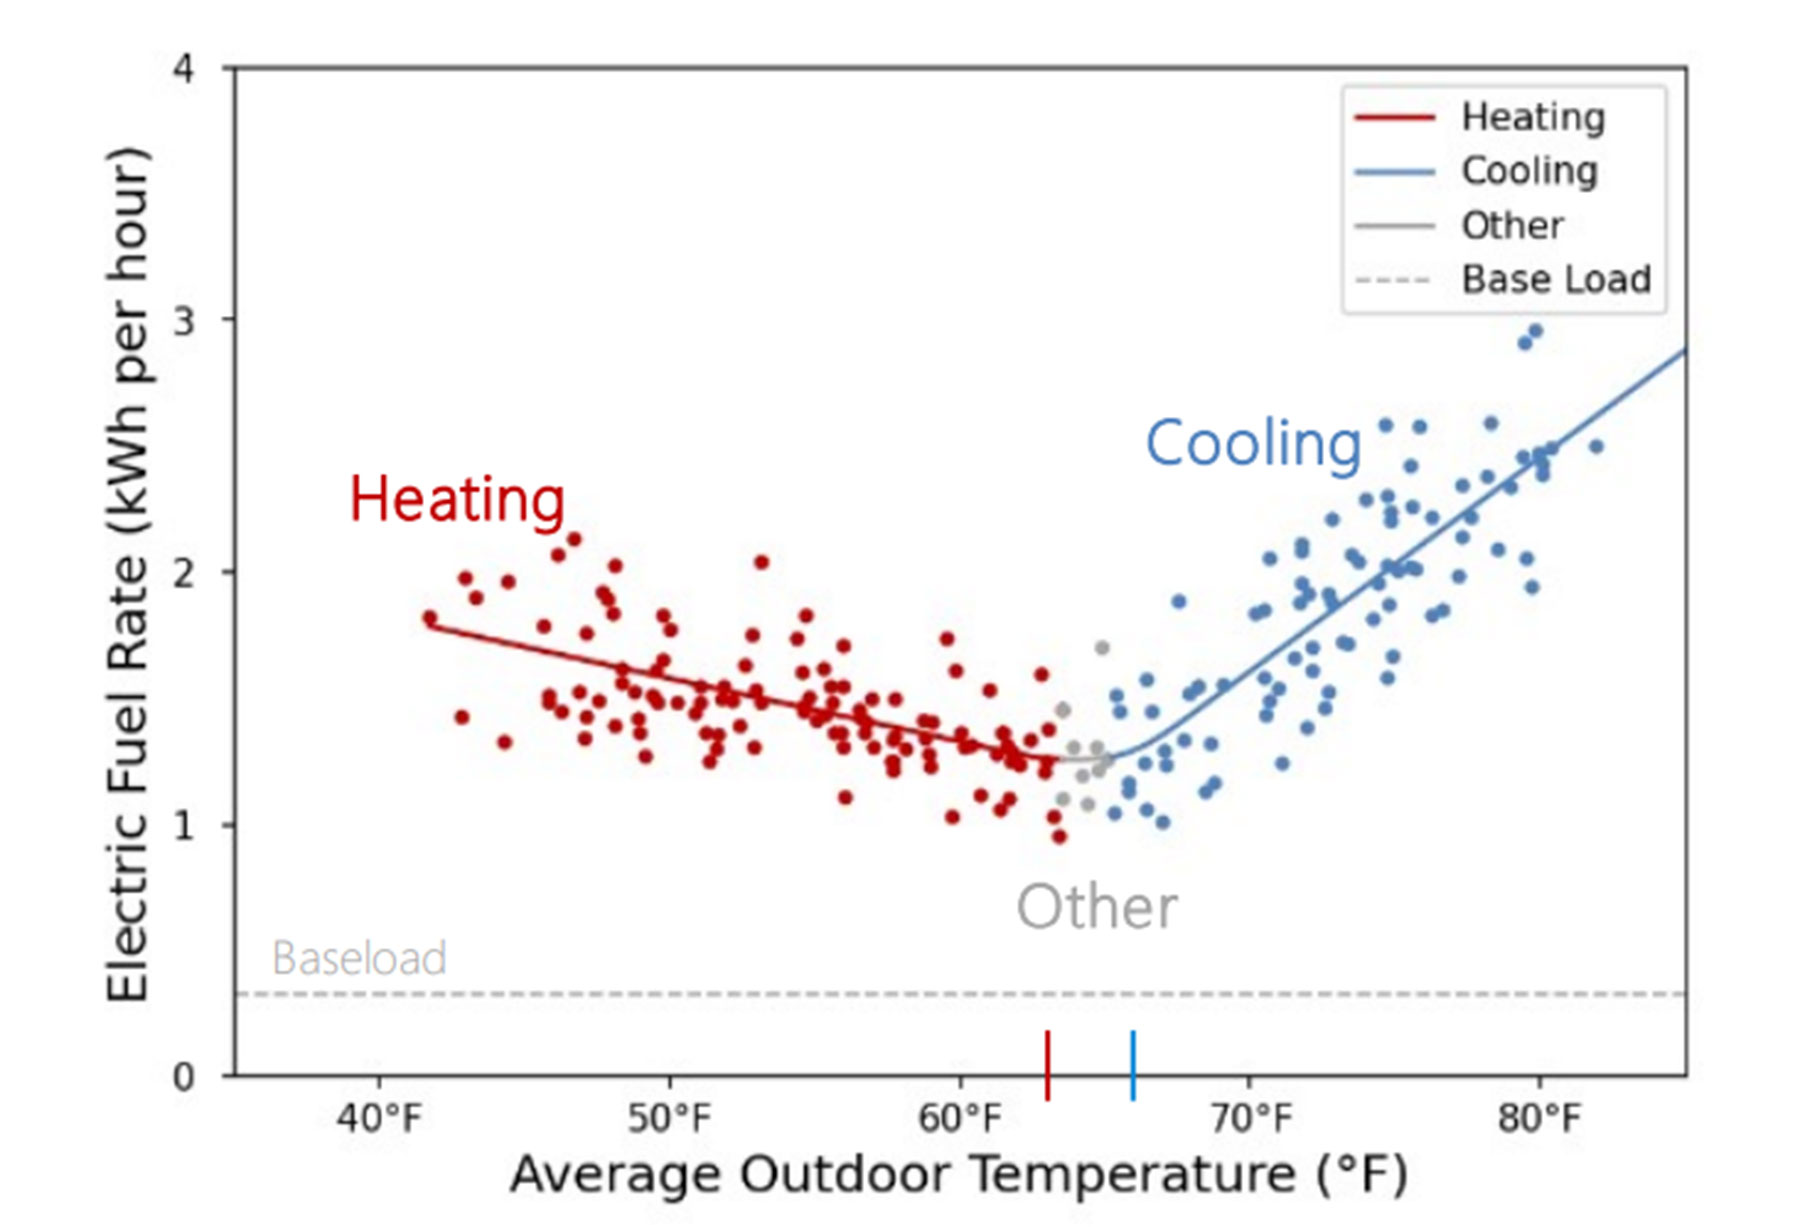 PowerClerk Analytics identify heating and cooling